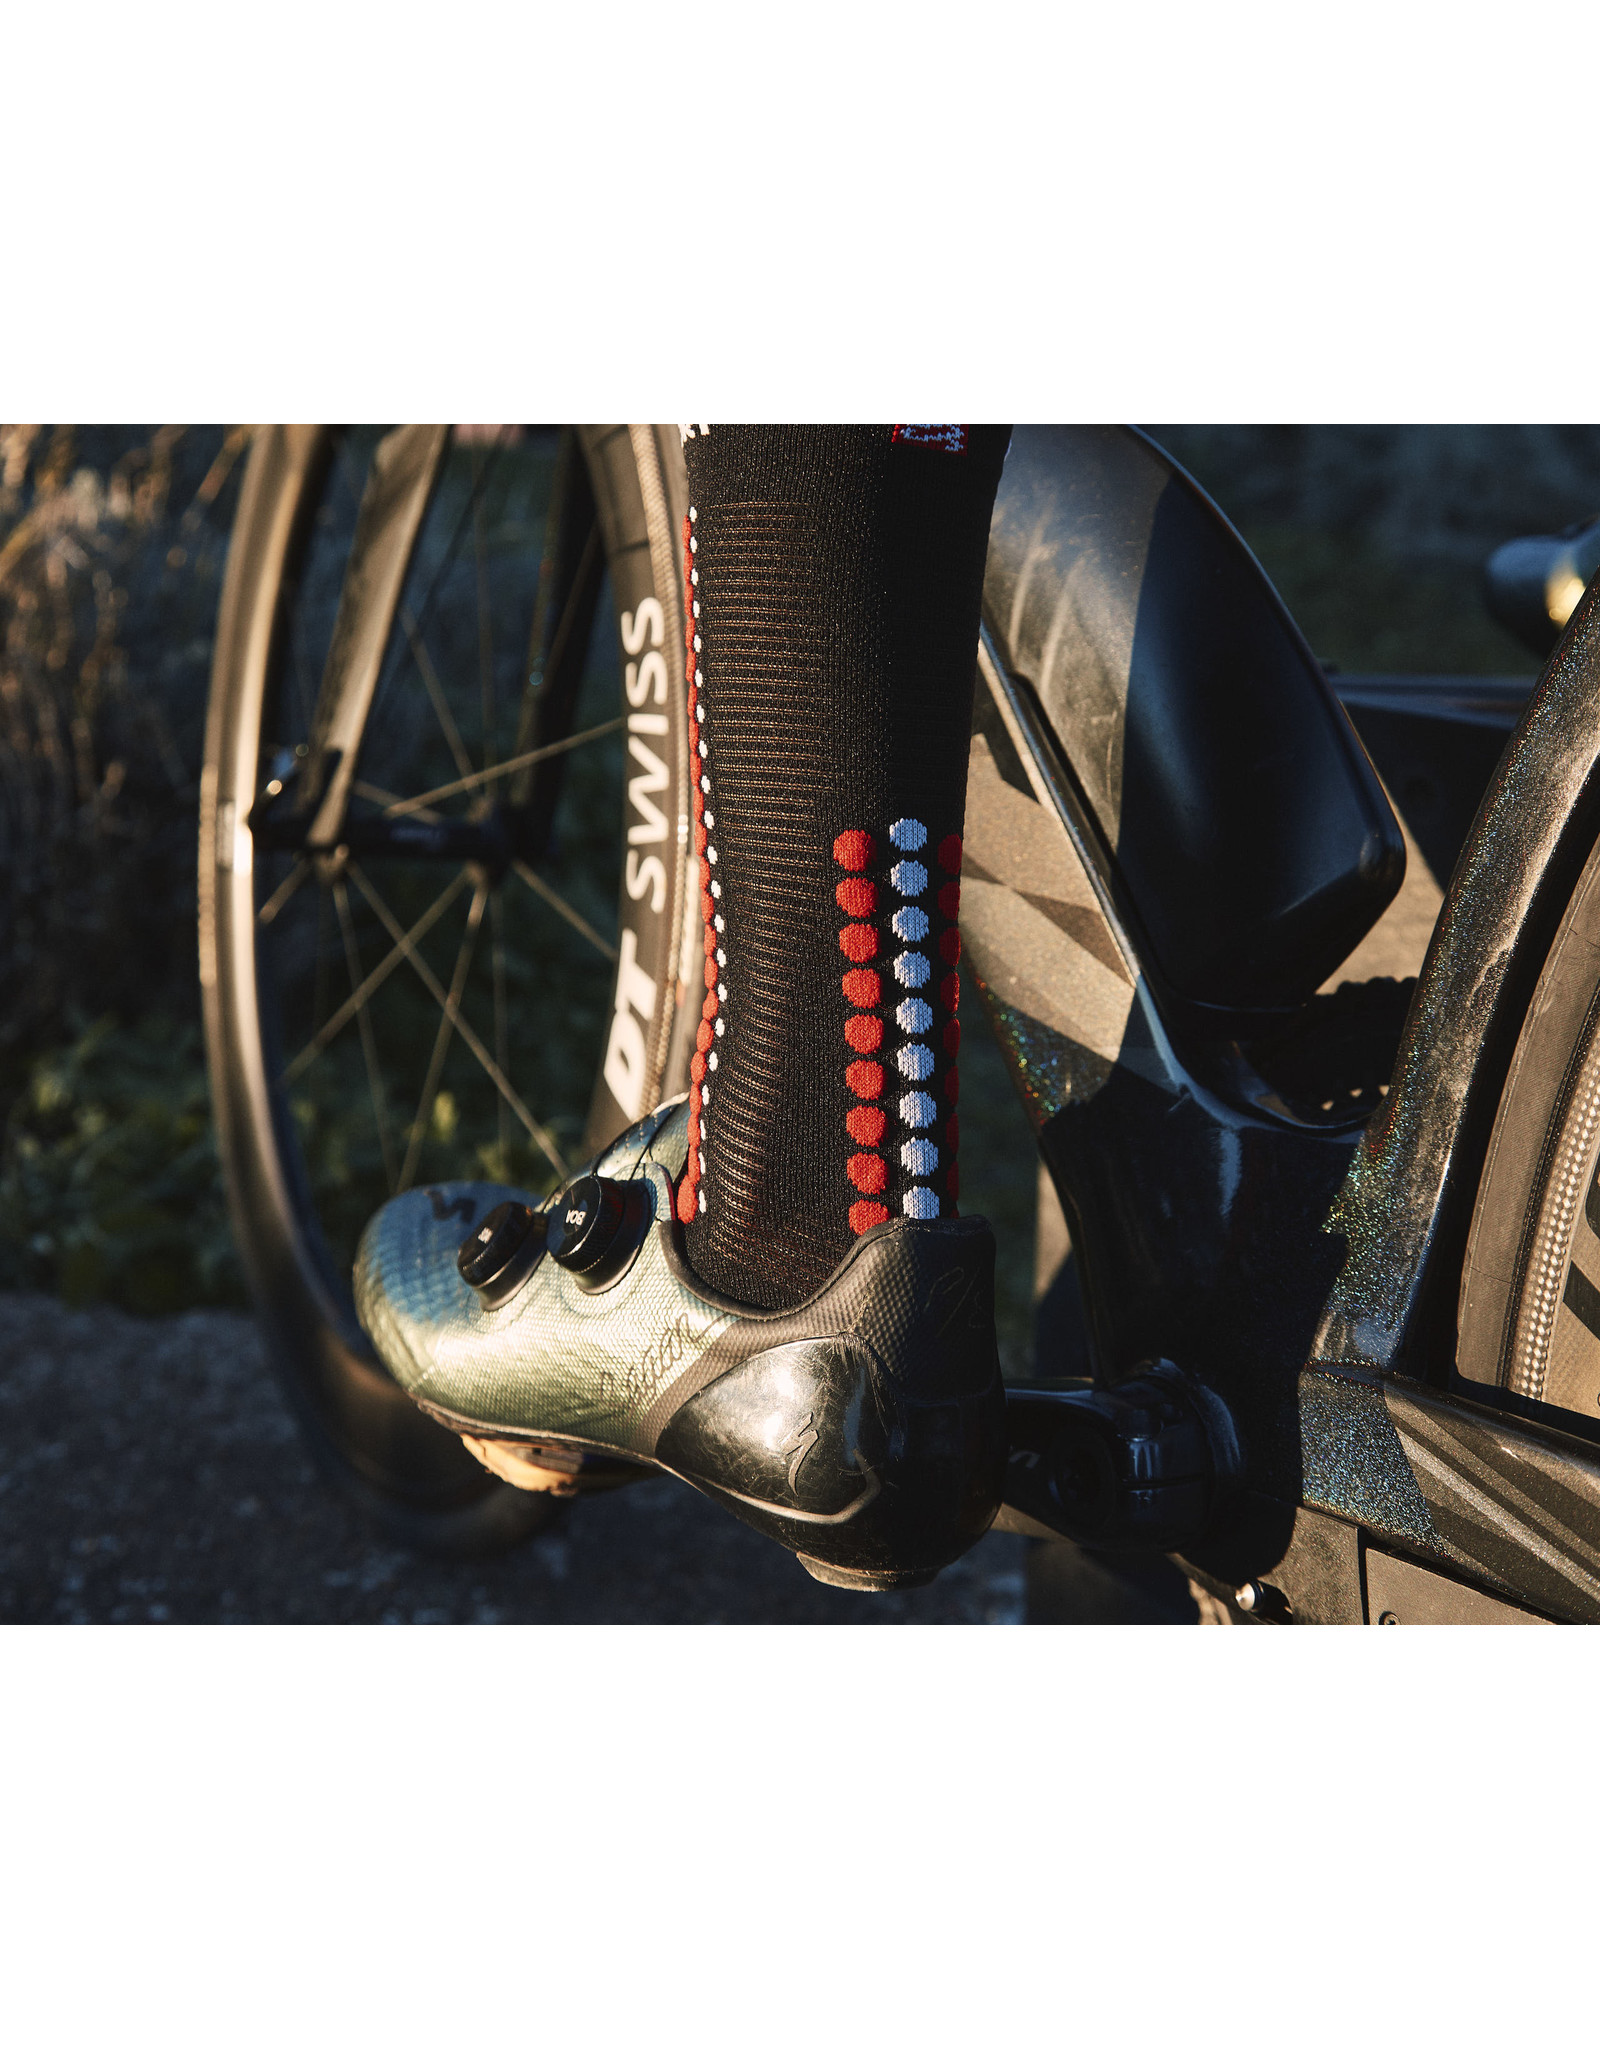 Compressport Pro Racing Socks v4.0 Bike - Black/Red